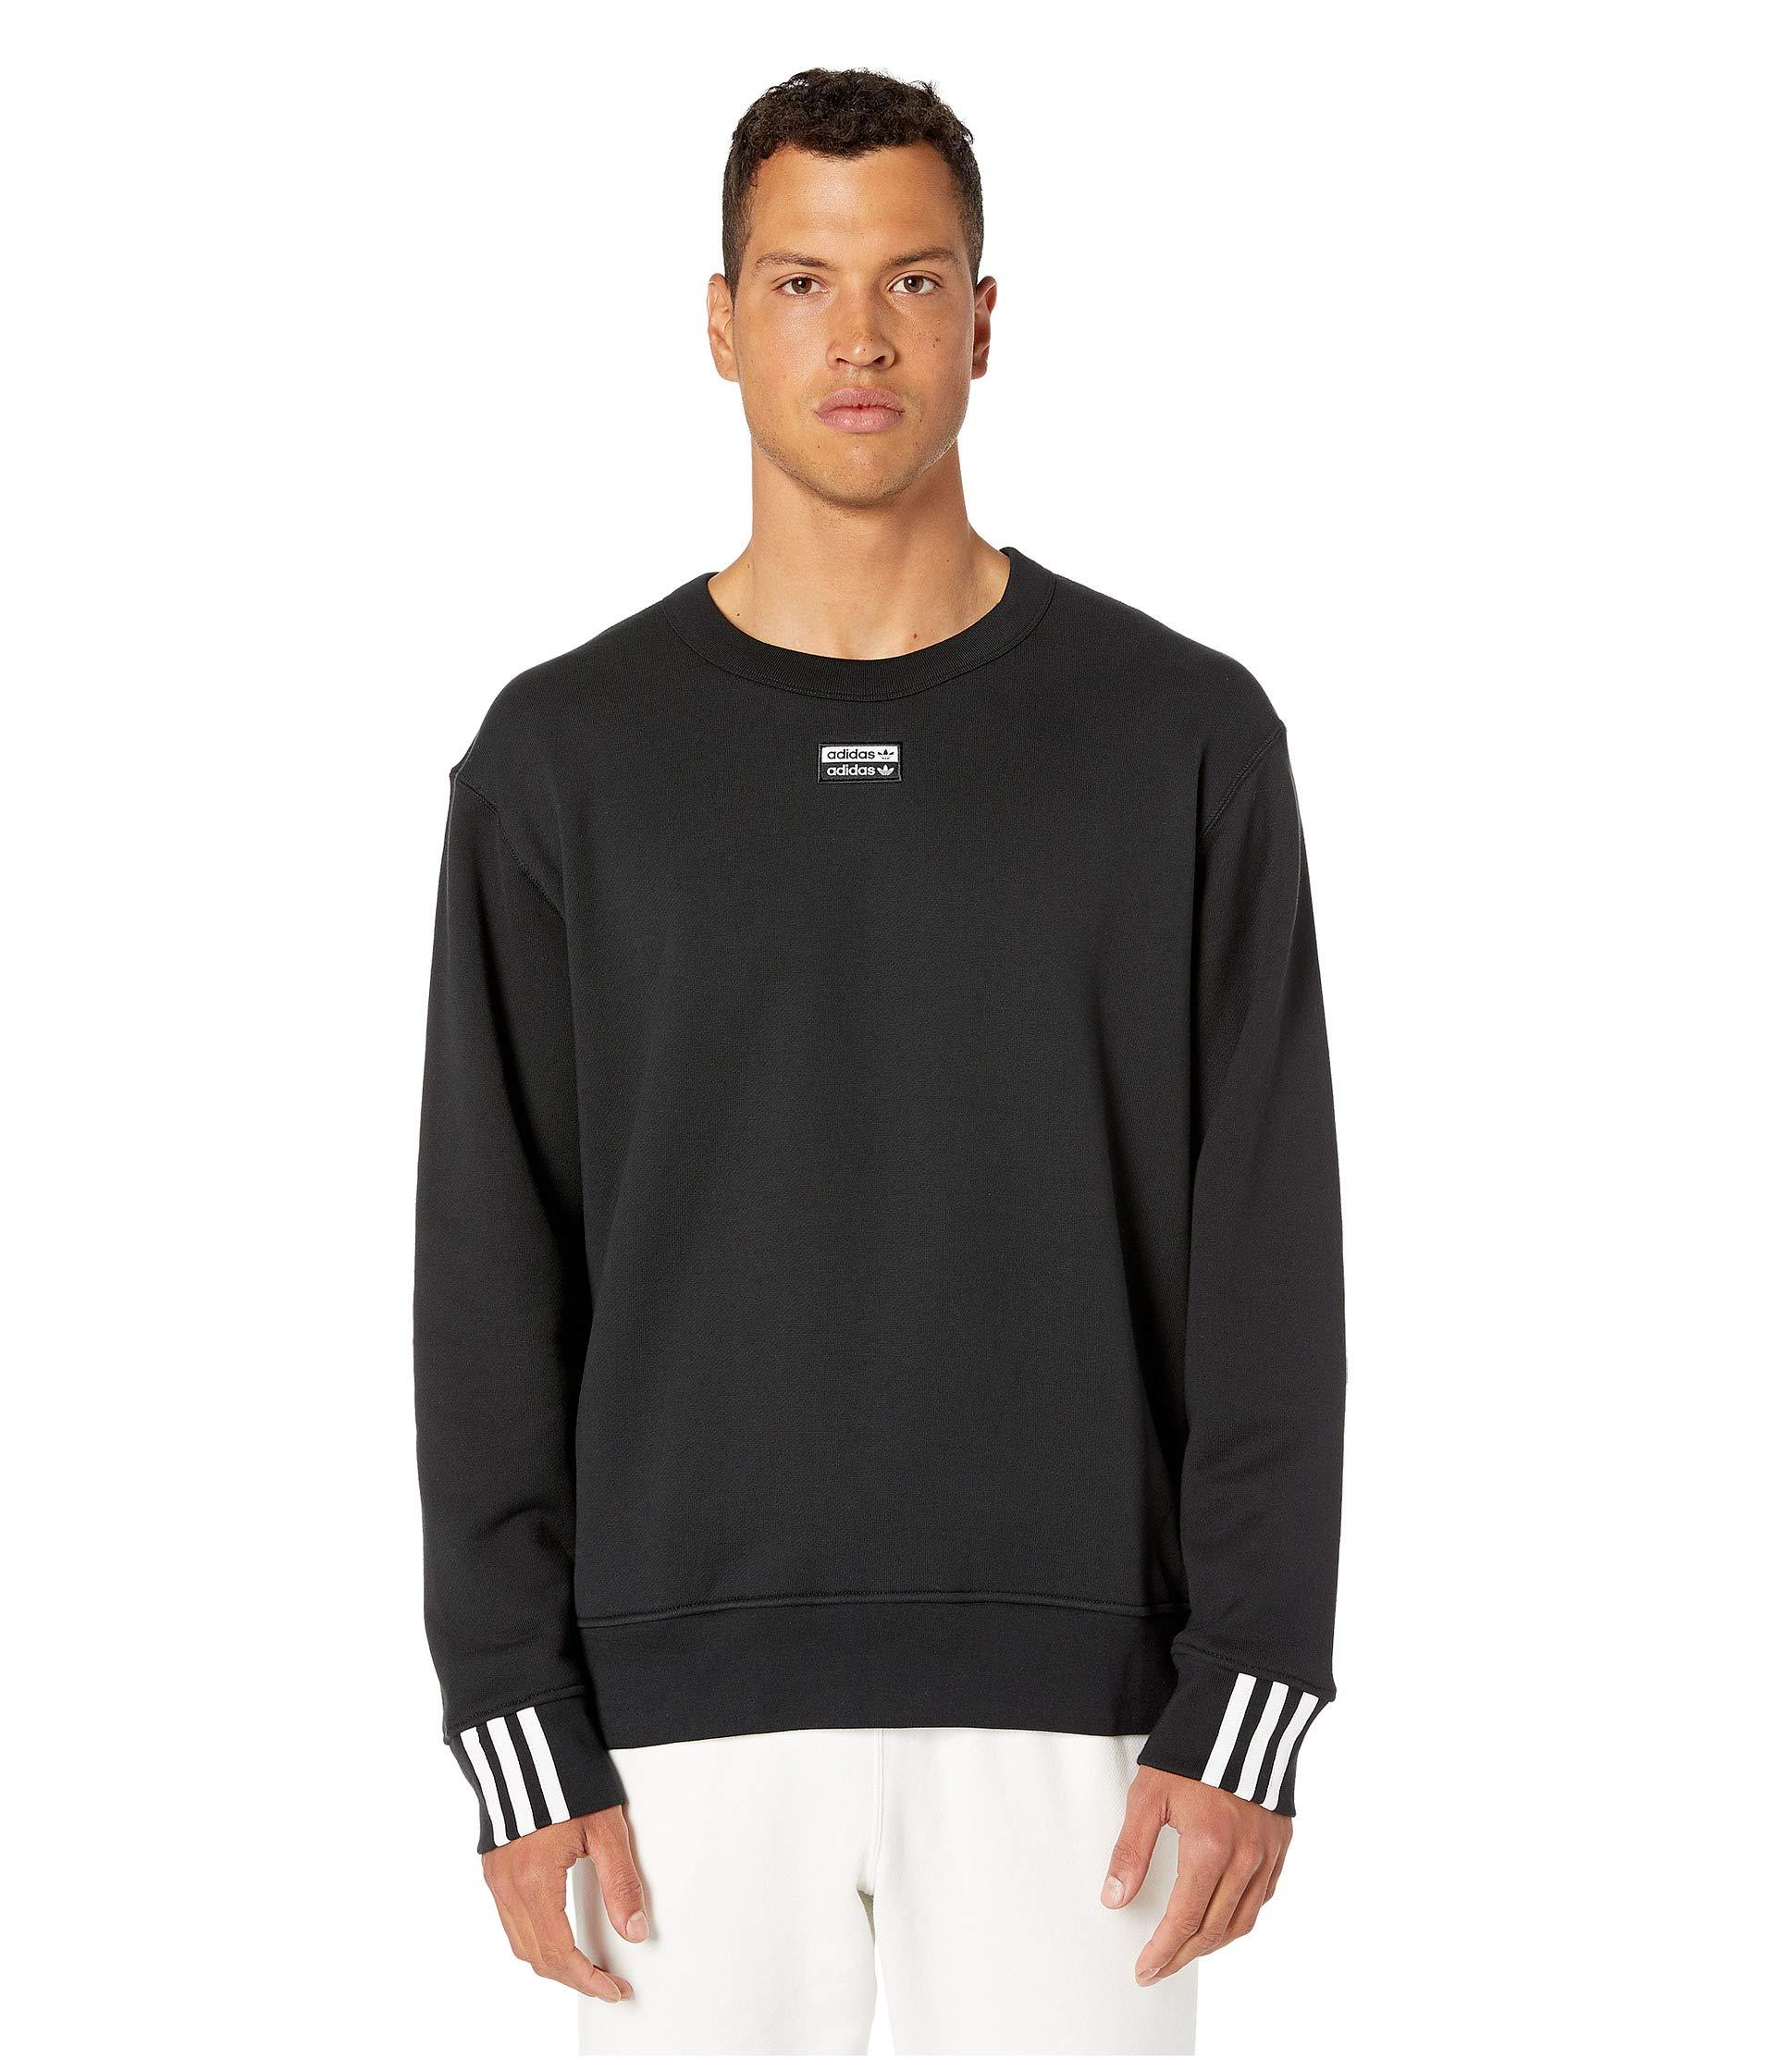 adidas Originals Cotton Vocal Crew Sweatshirt in Black for Men - Lyst